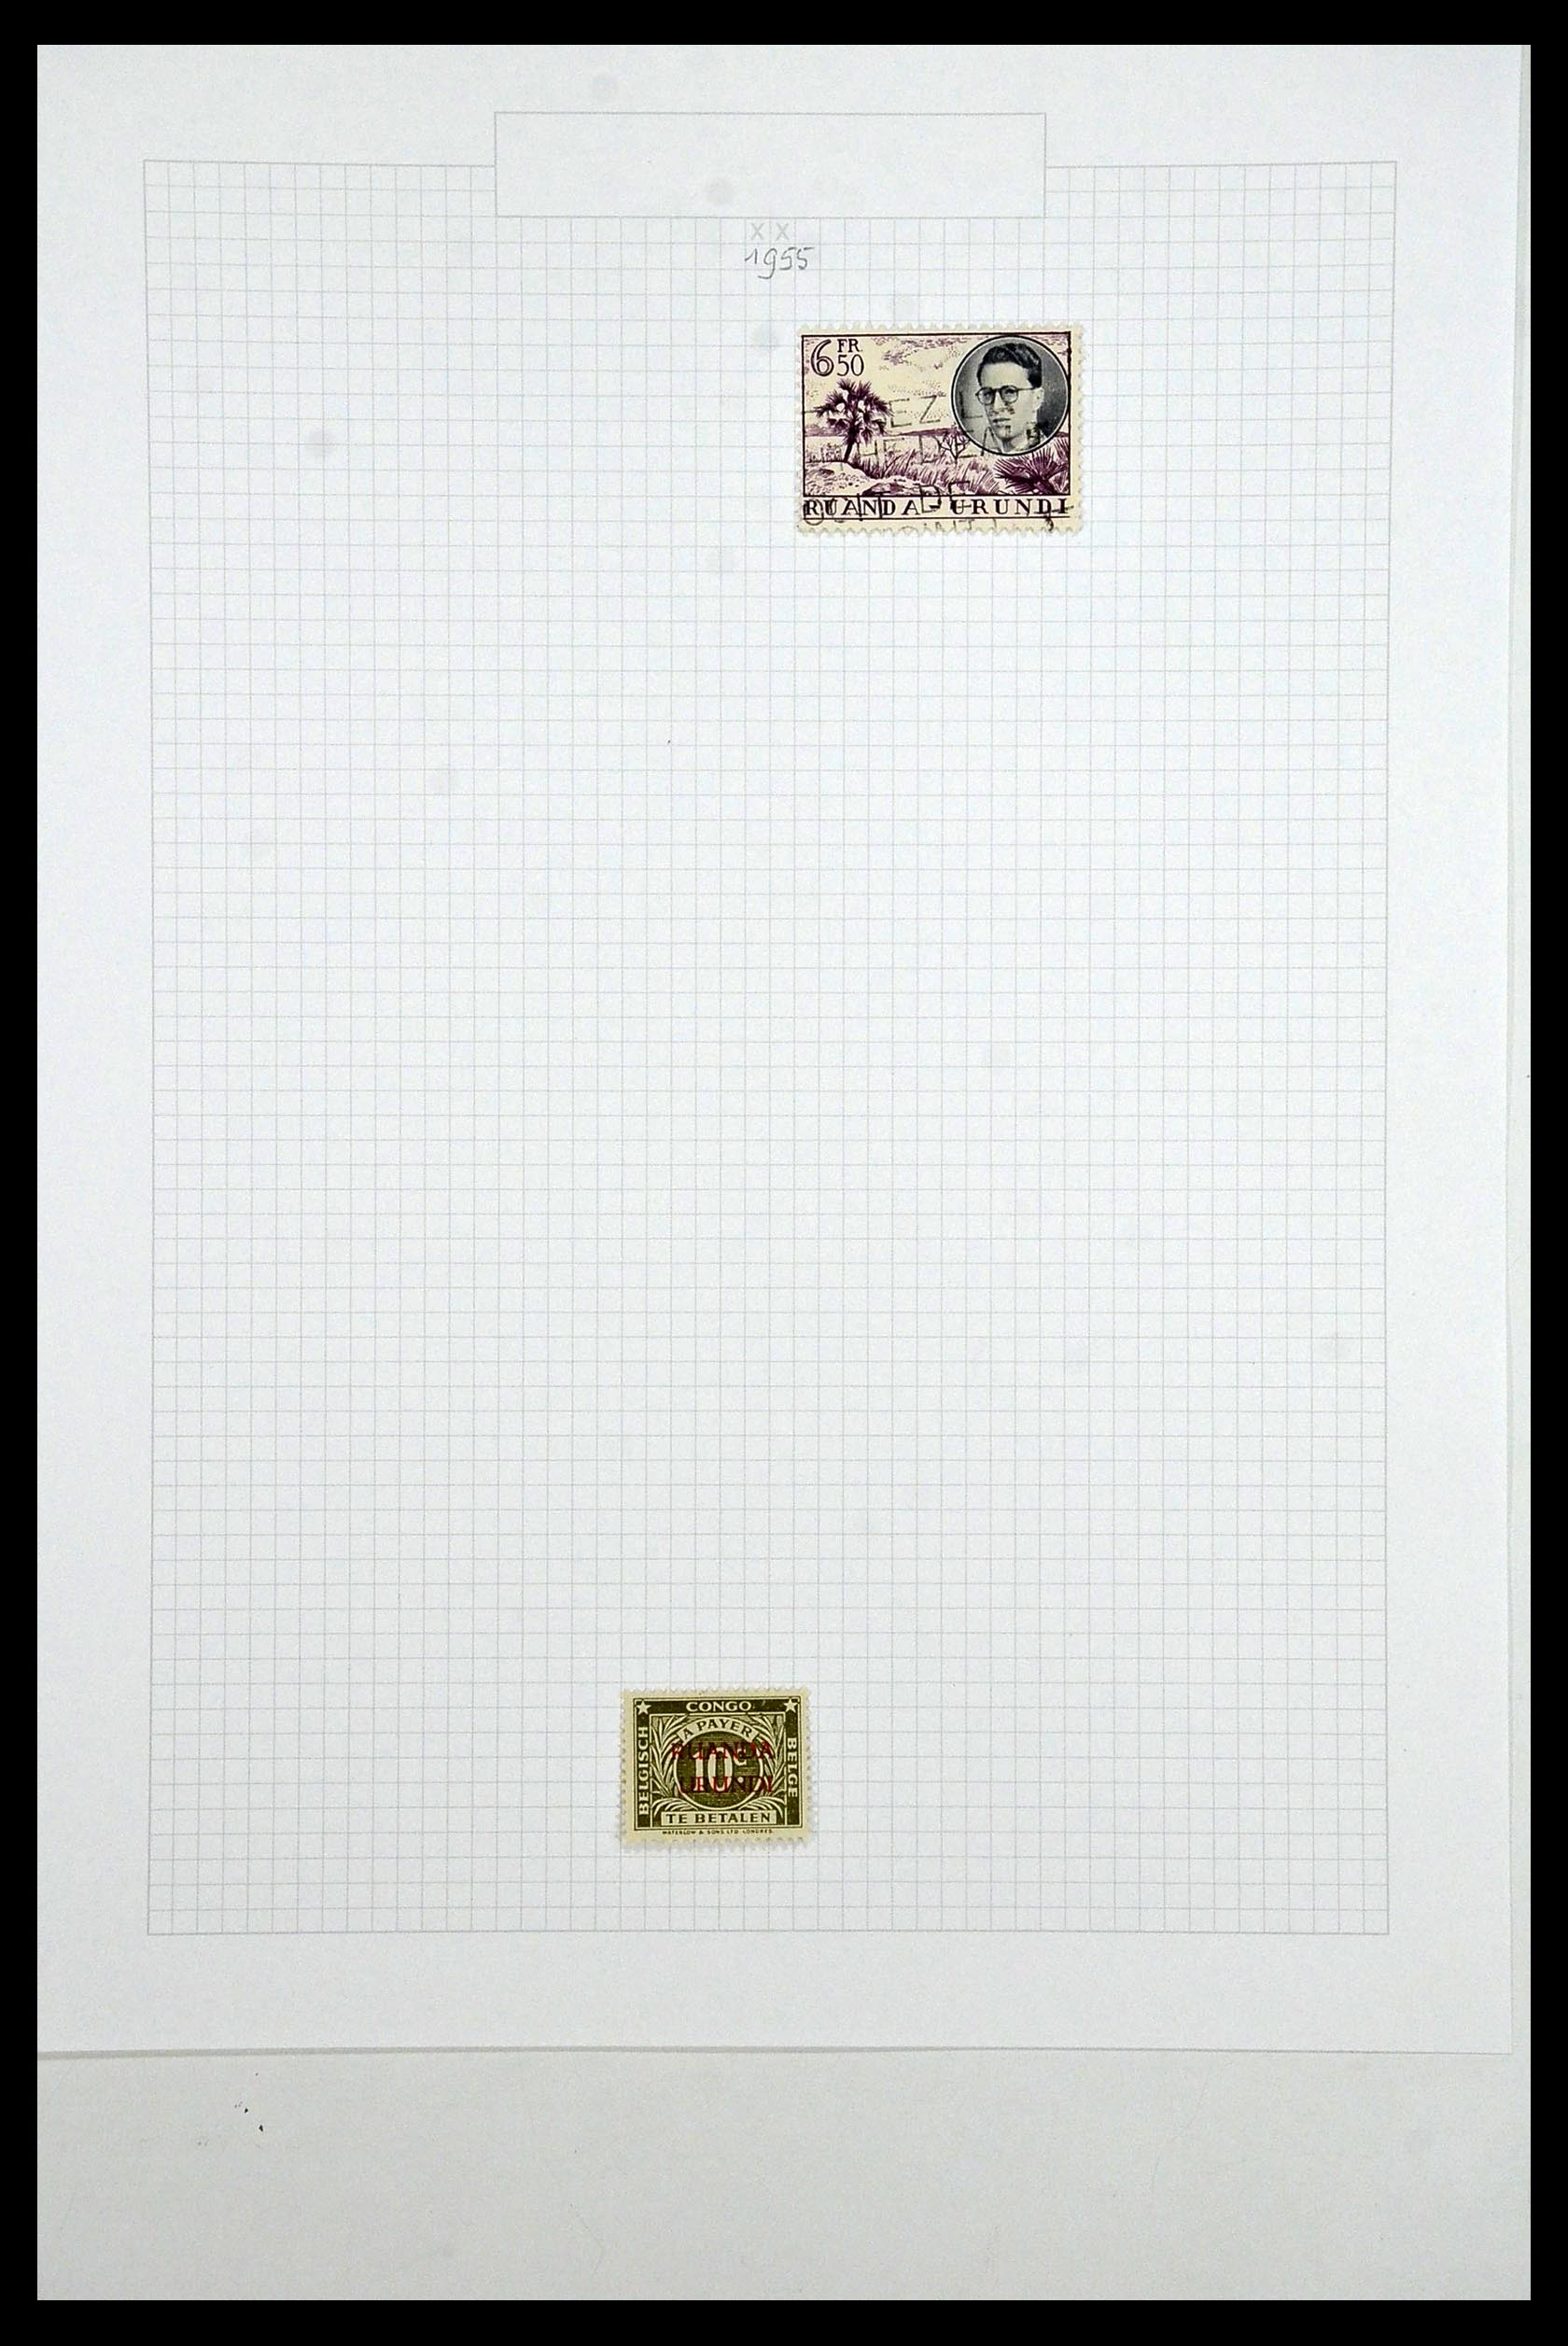 34001 352 - Stamp collection 34001 Belgium 1849-1998.